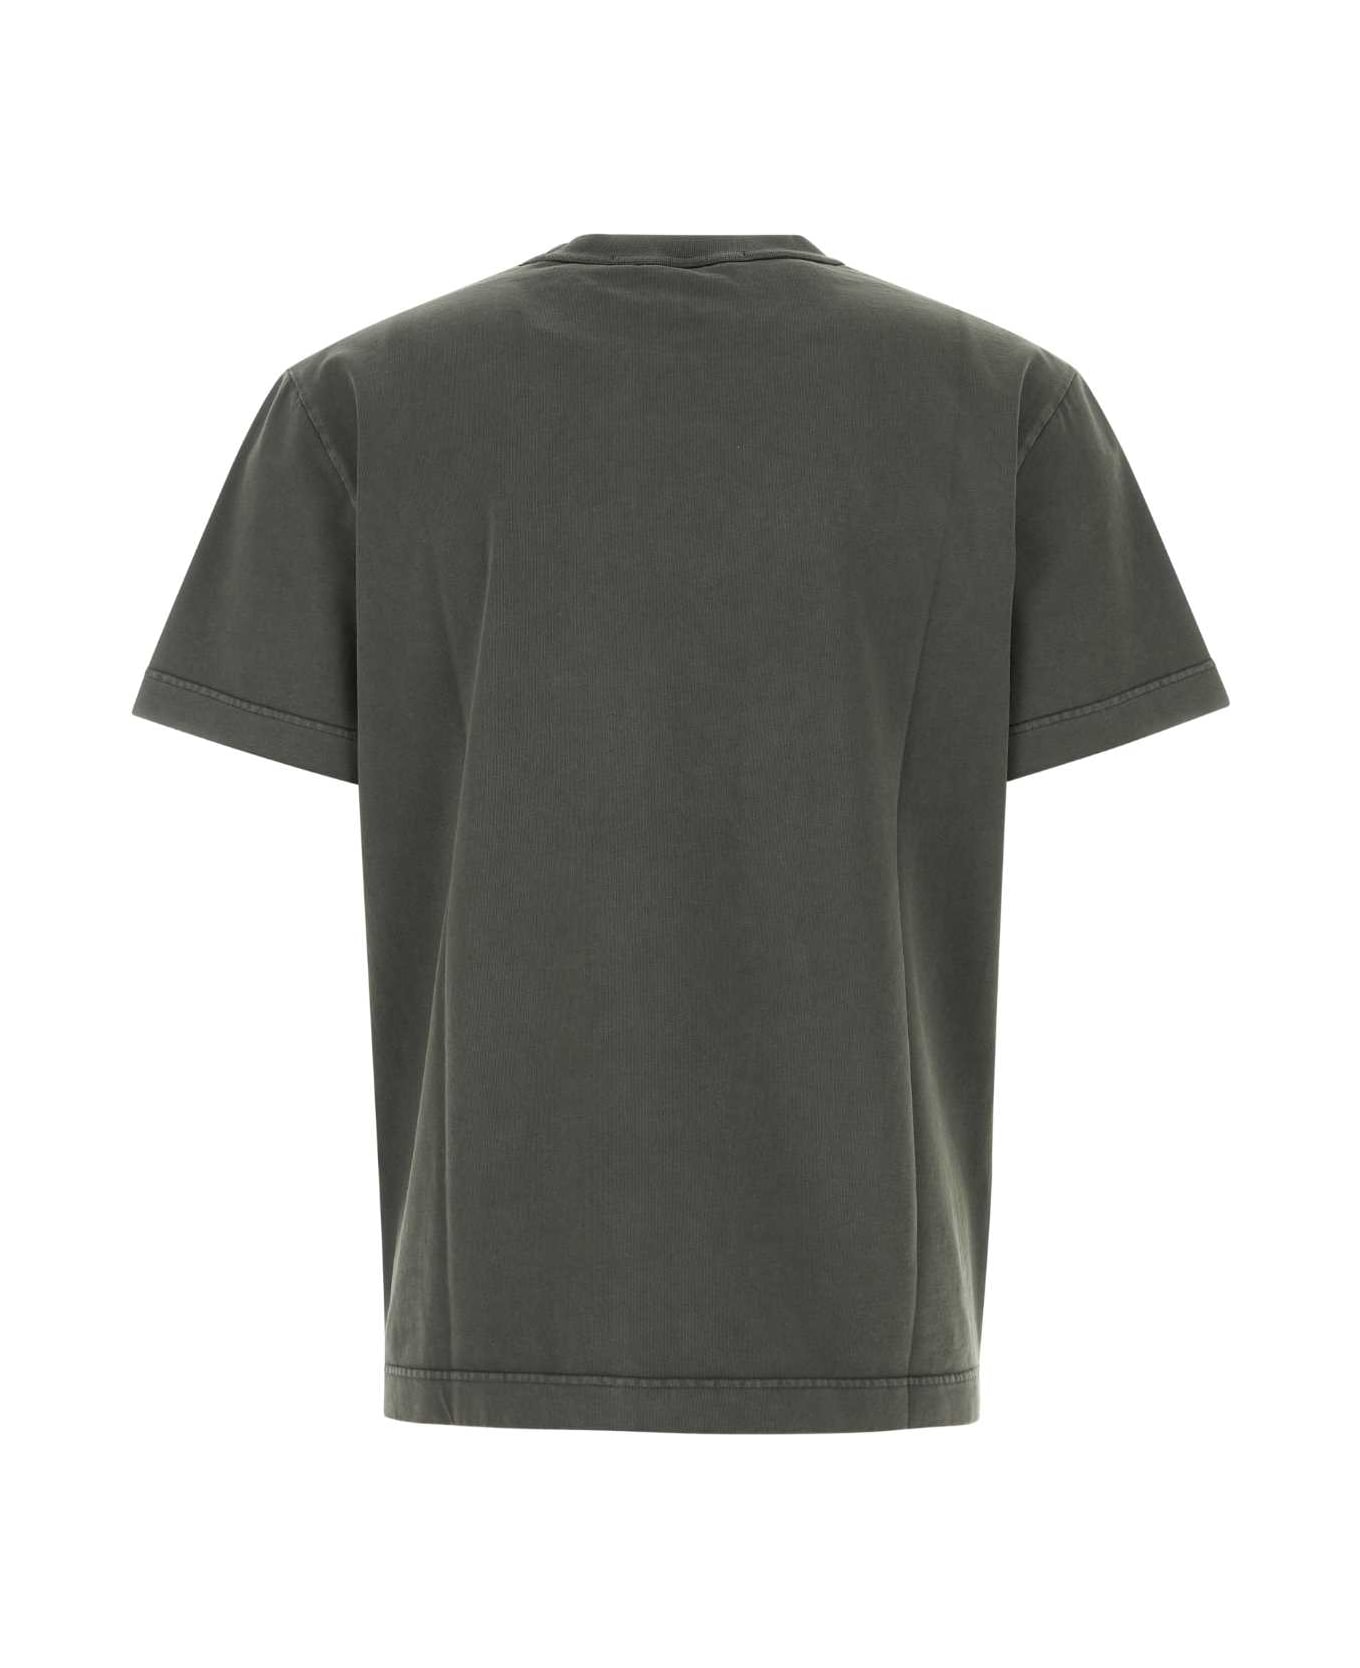 Alexander Wang Dark Grey Cotton T-shirt - SOFTOBSIDIAN